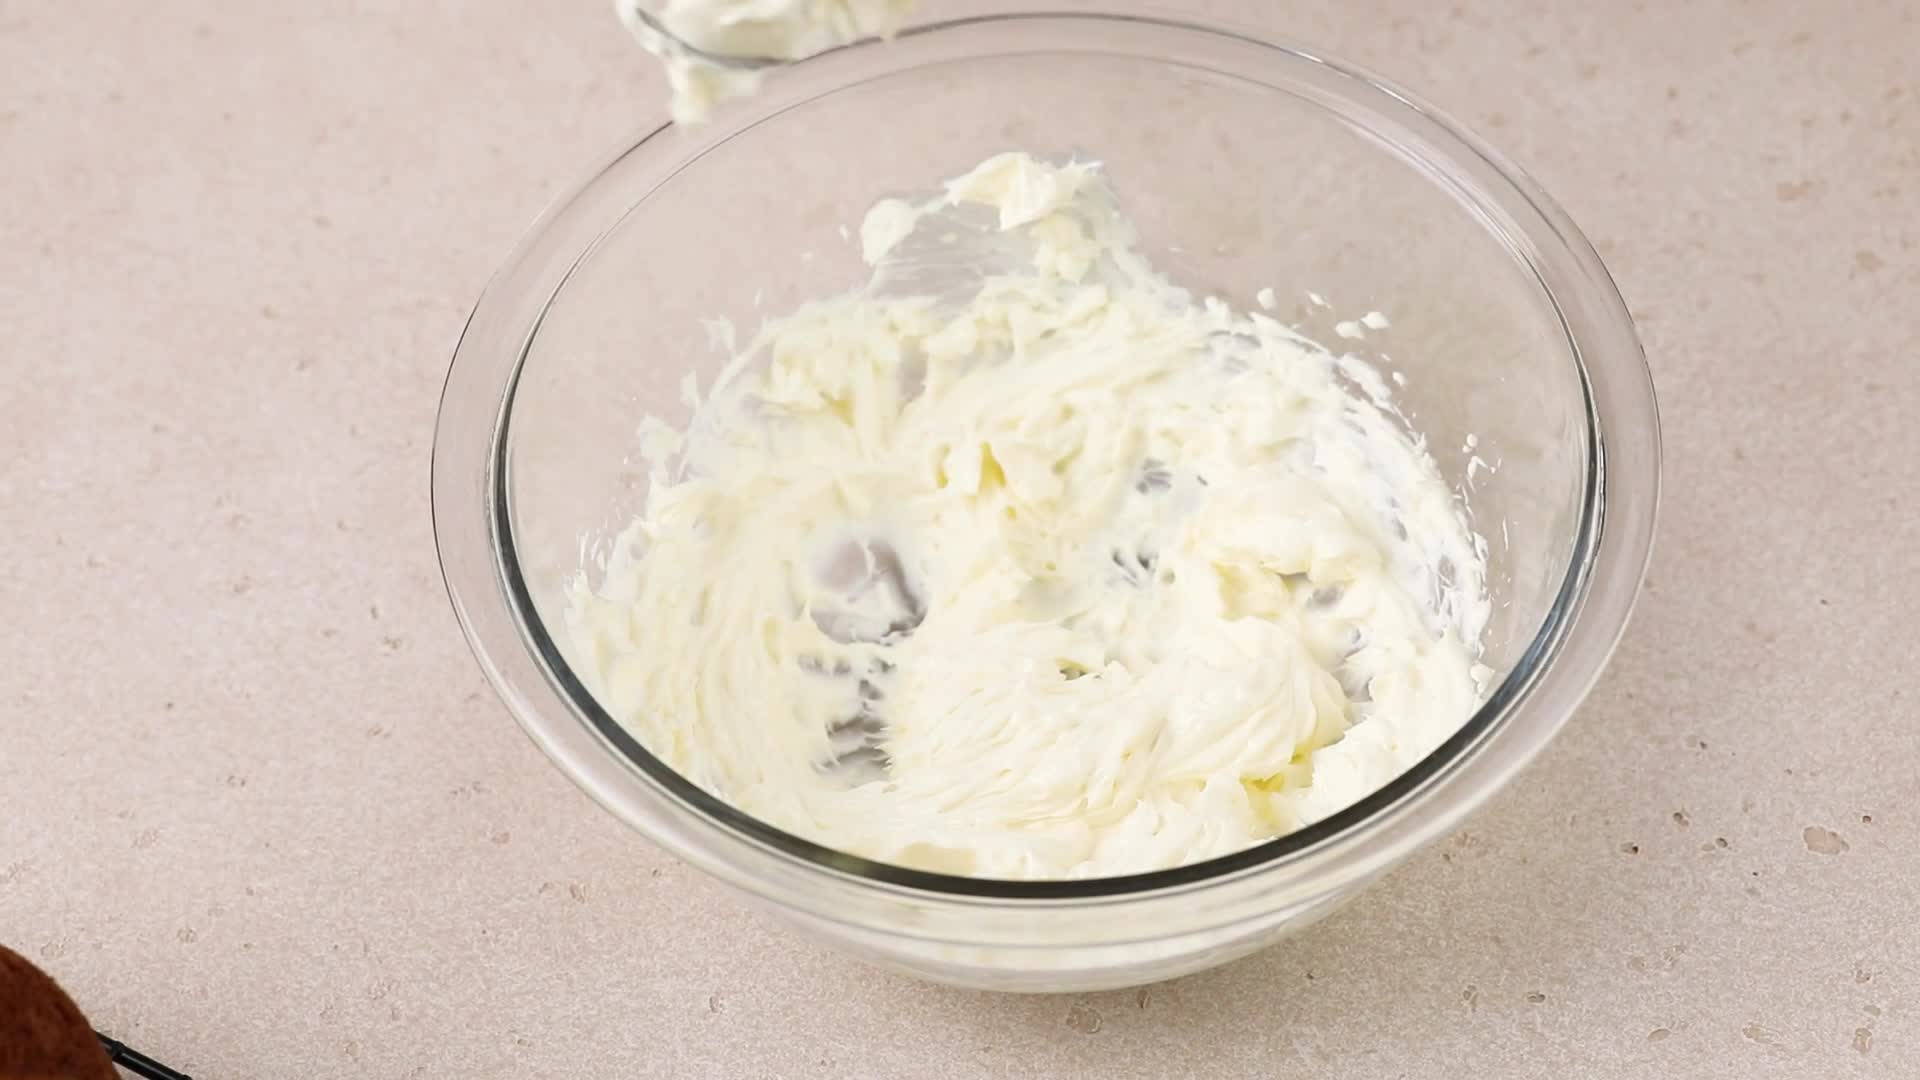 Easy Vanilla Bundt Cake with Cream Cheese Frosting - My Baking Addiction